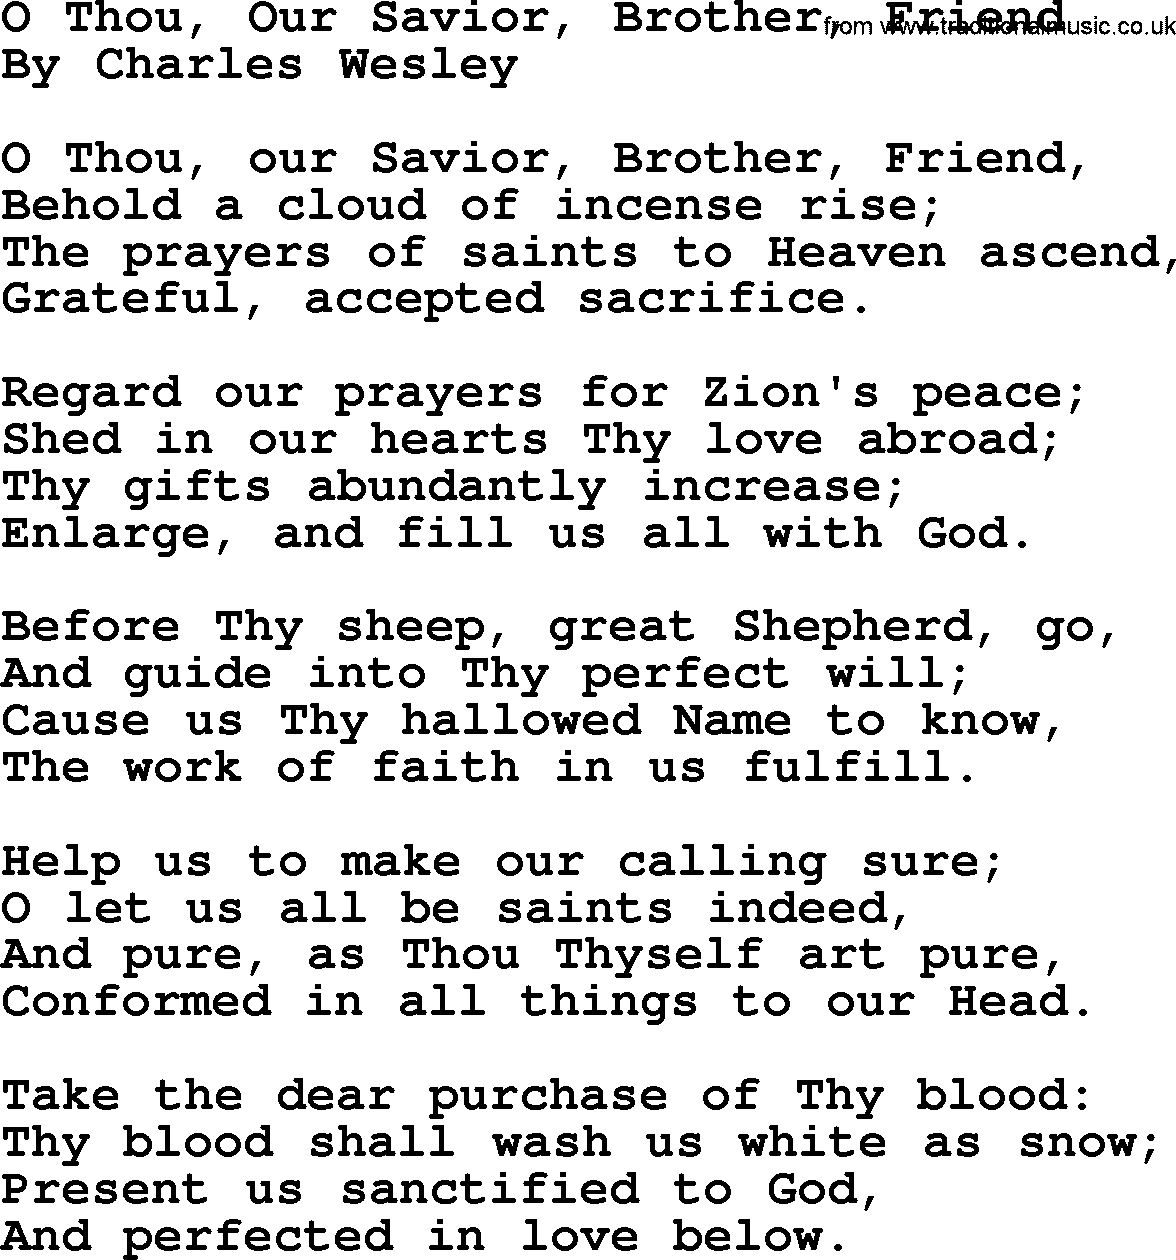 Charles Wesley hymn: O Thou, Our Savior, Brother, Friend, lyrics